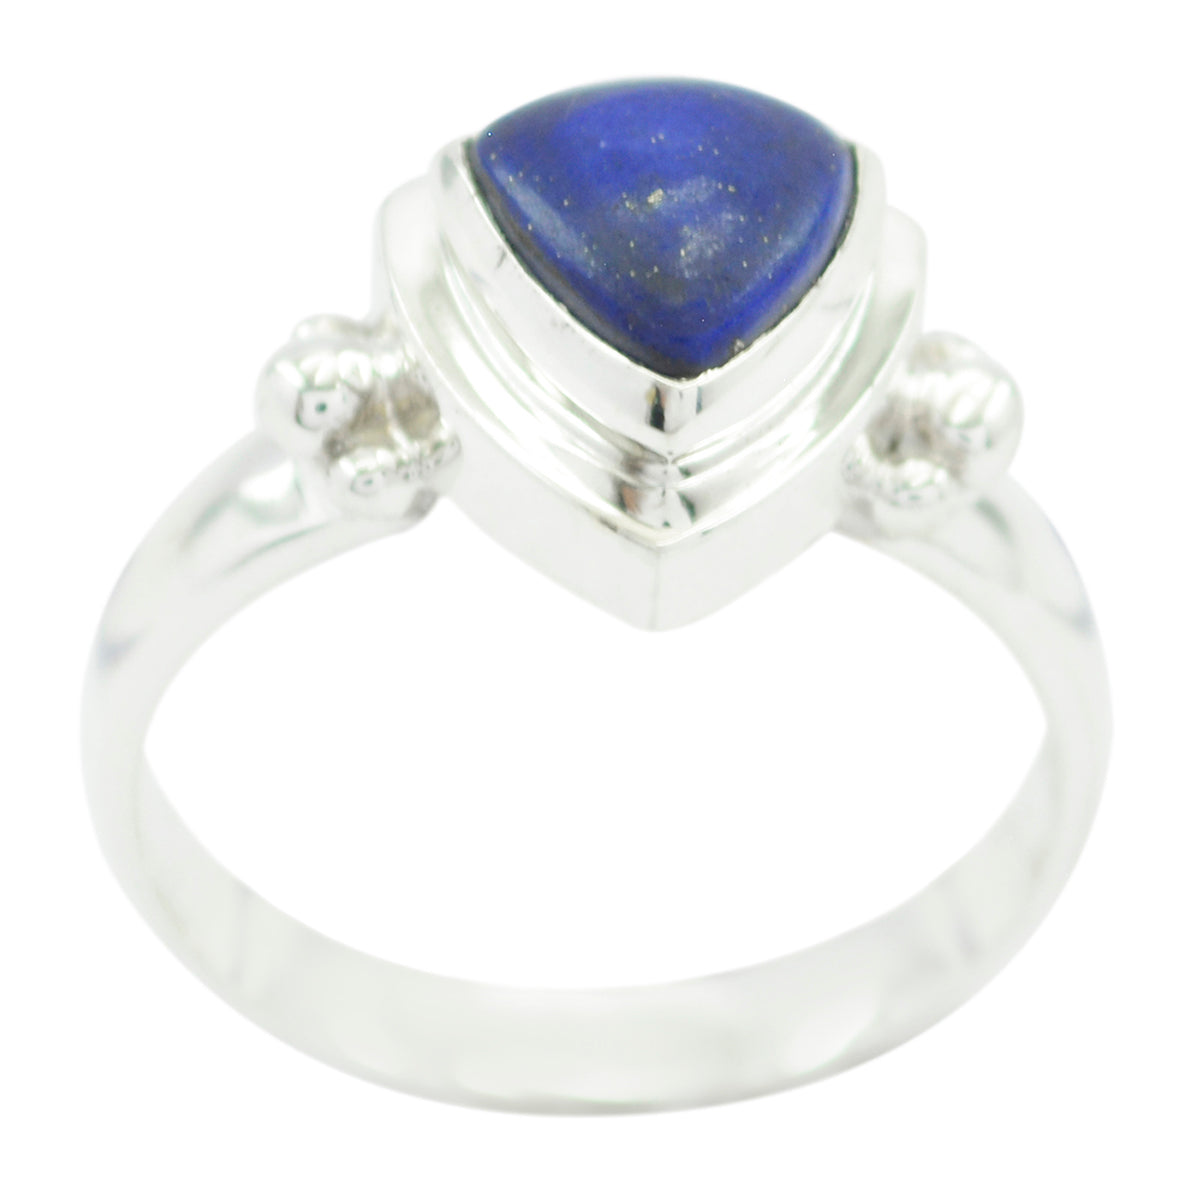 Riyo Refined Gemstone Lapis Lazuli Solid Silver Rings Stone Jewelry